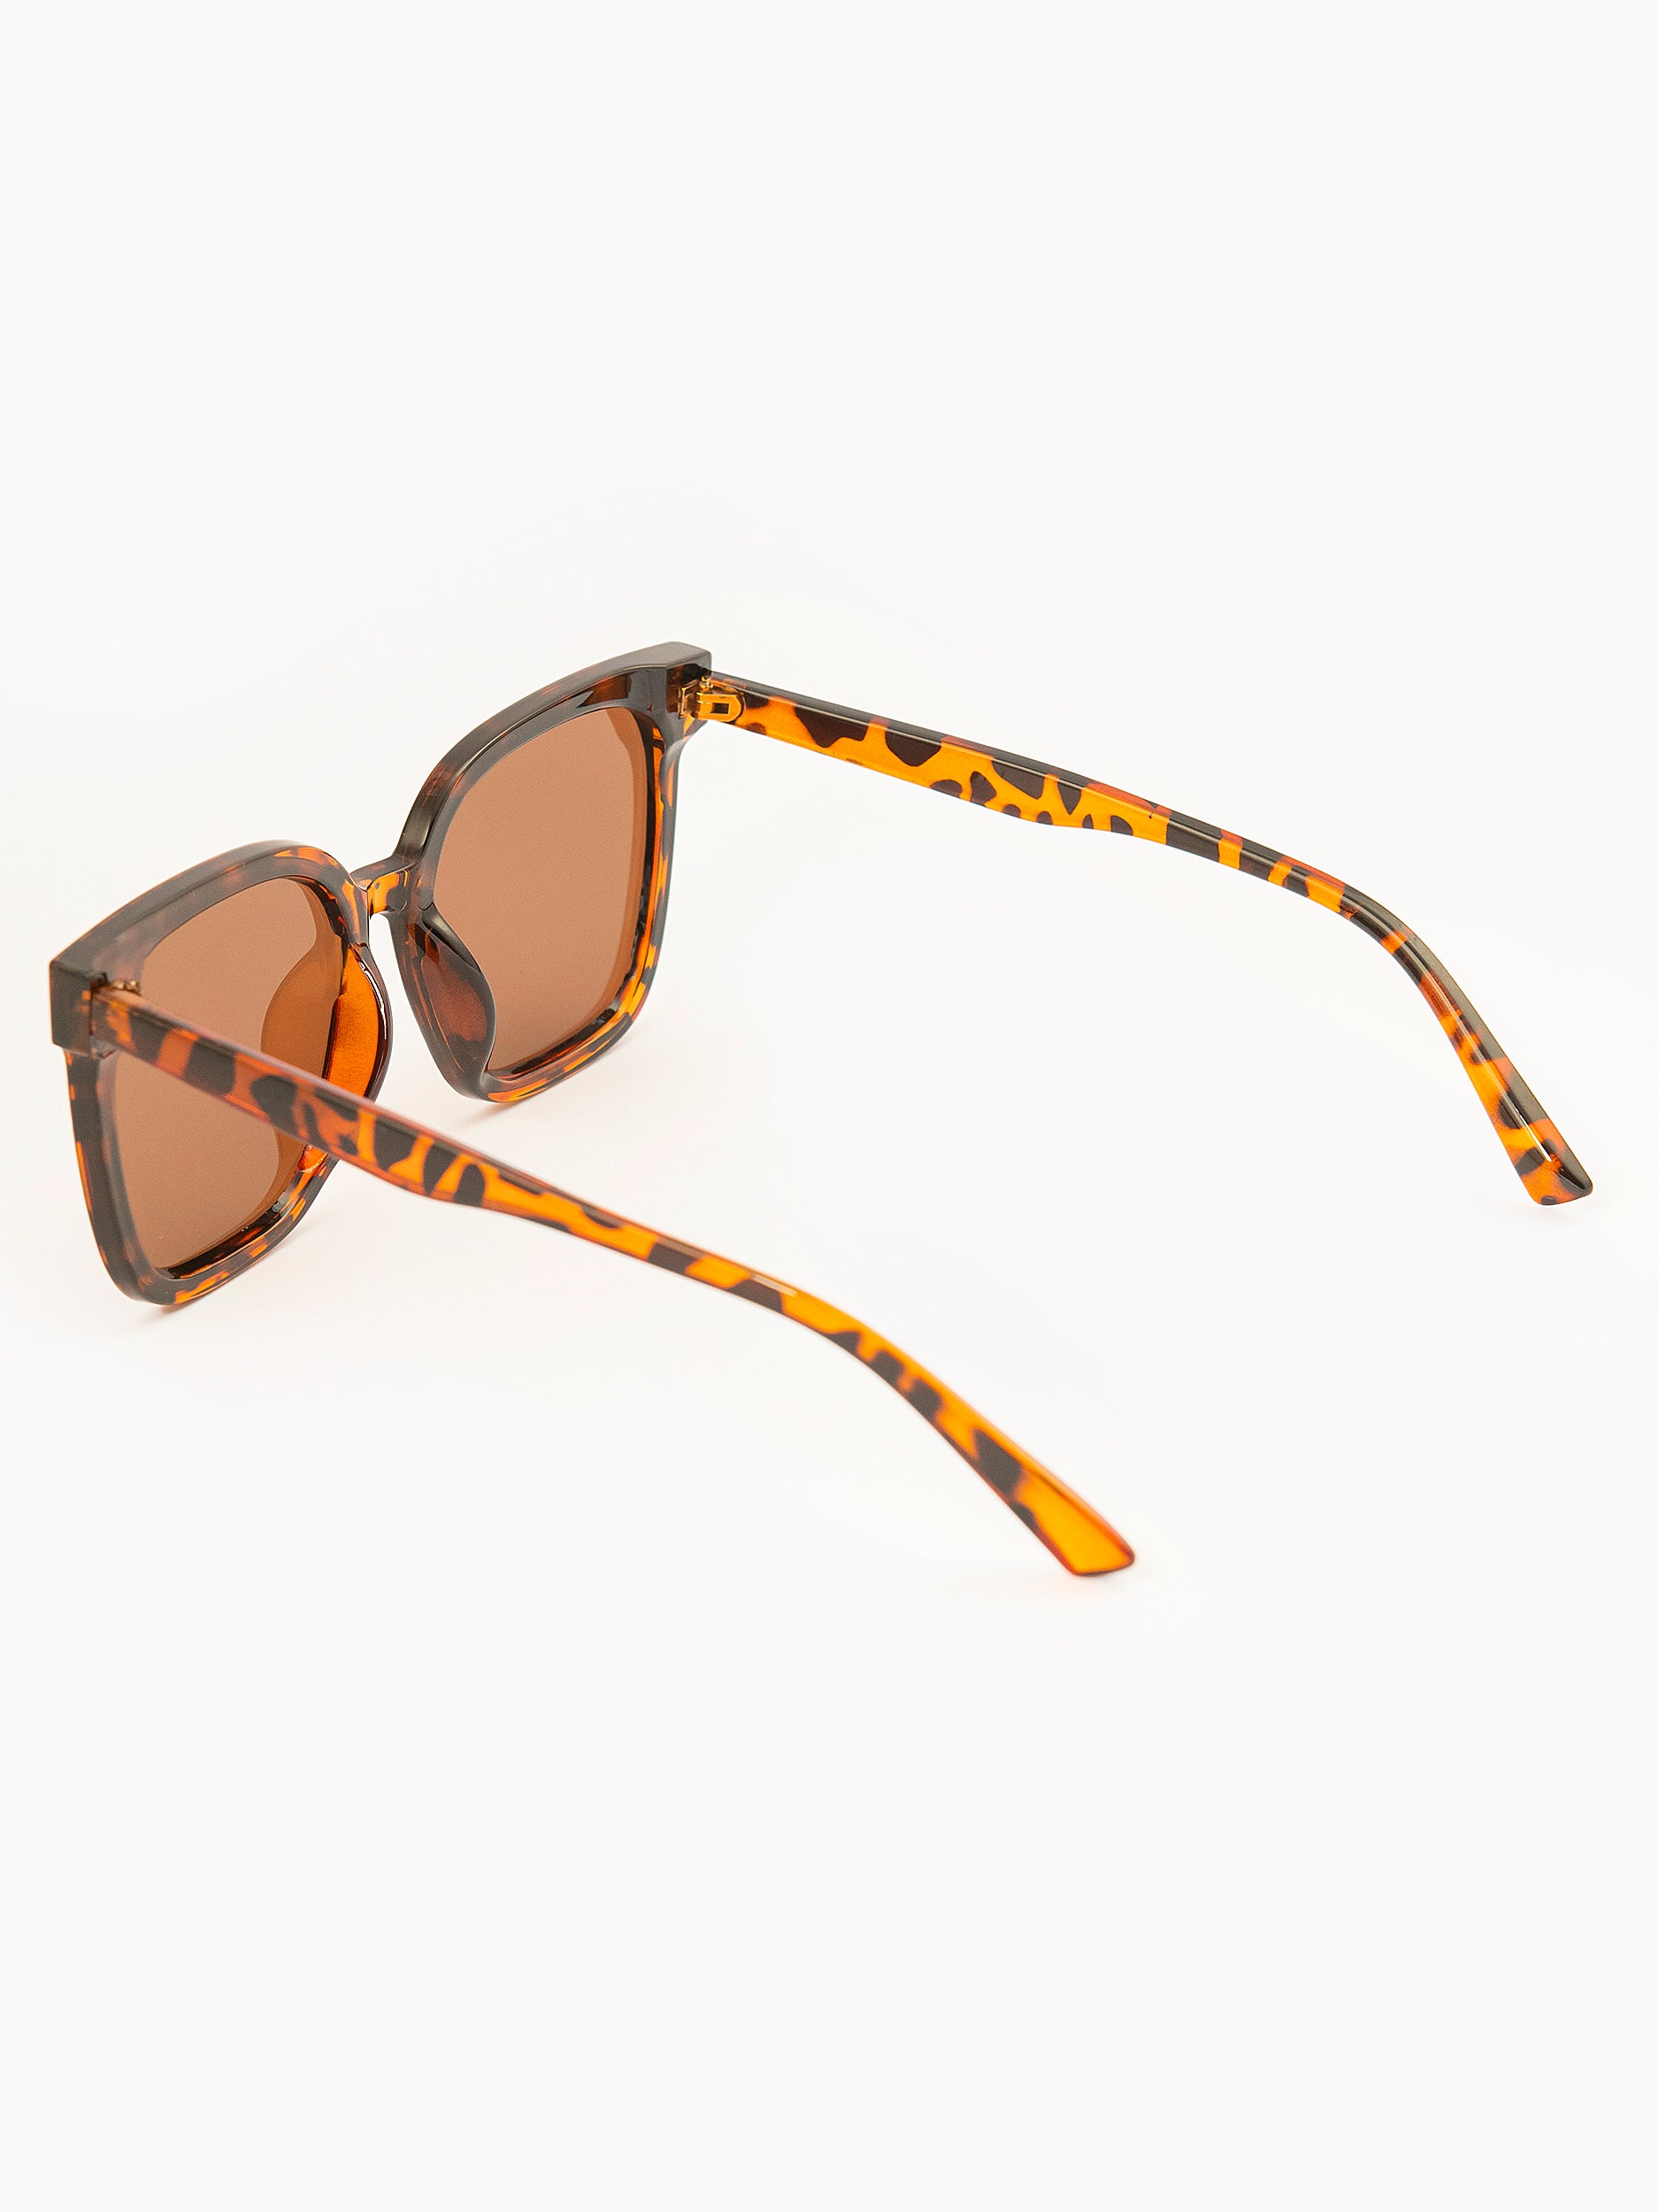 Leapord Print Sunglasses